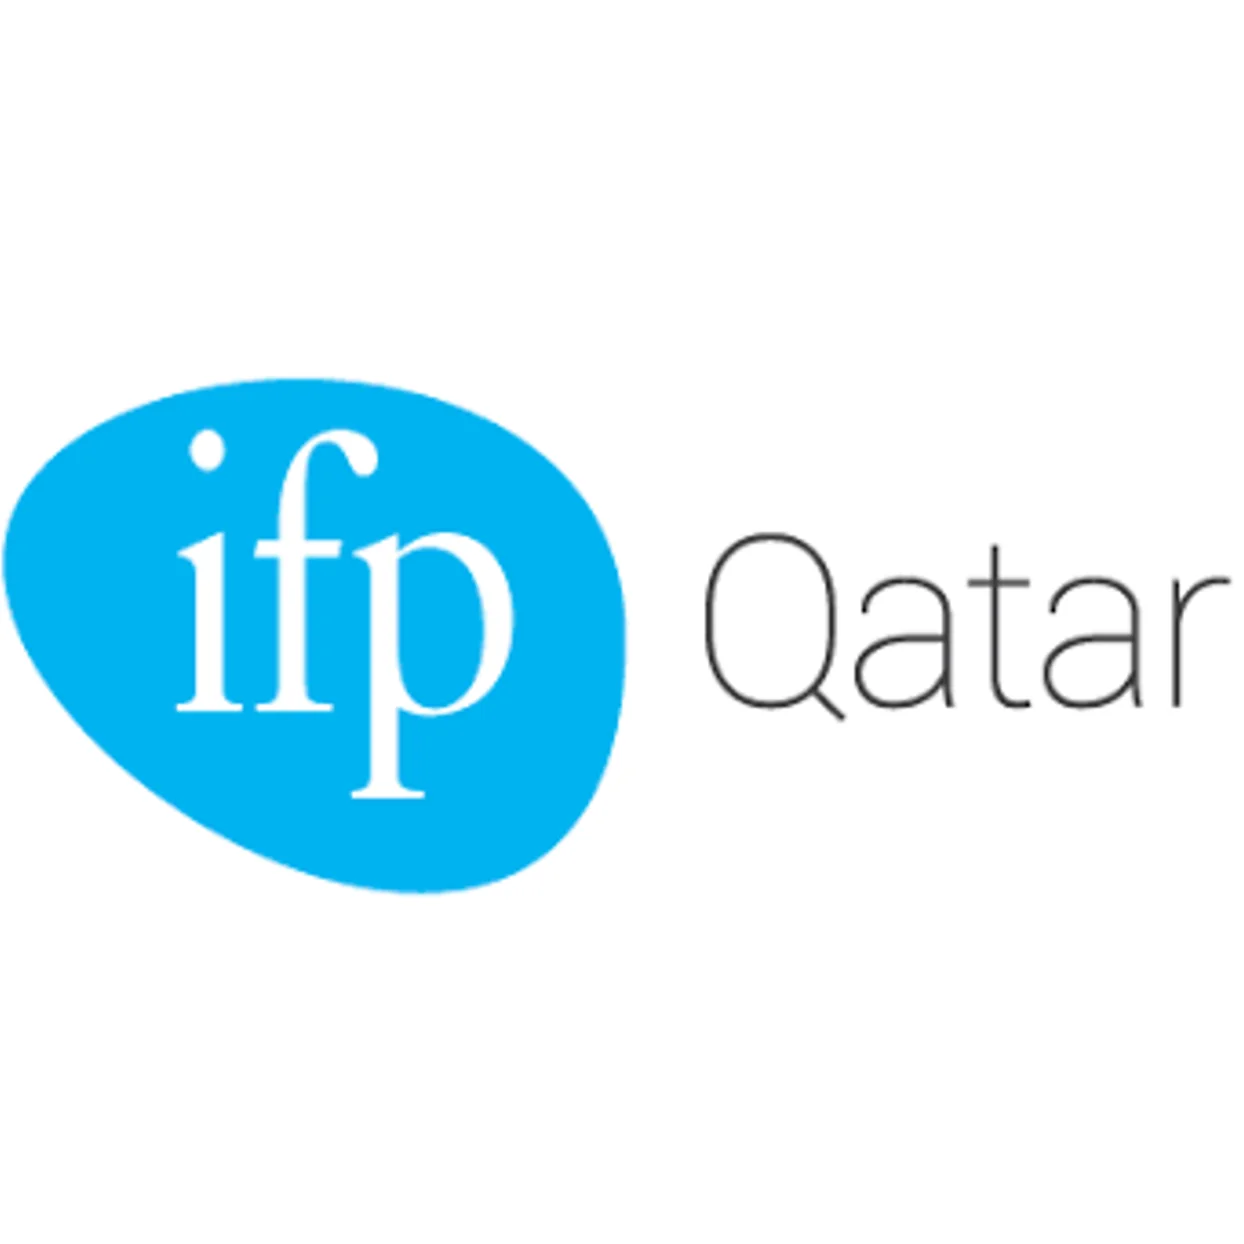 ifp qatar